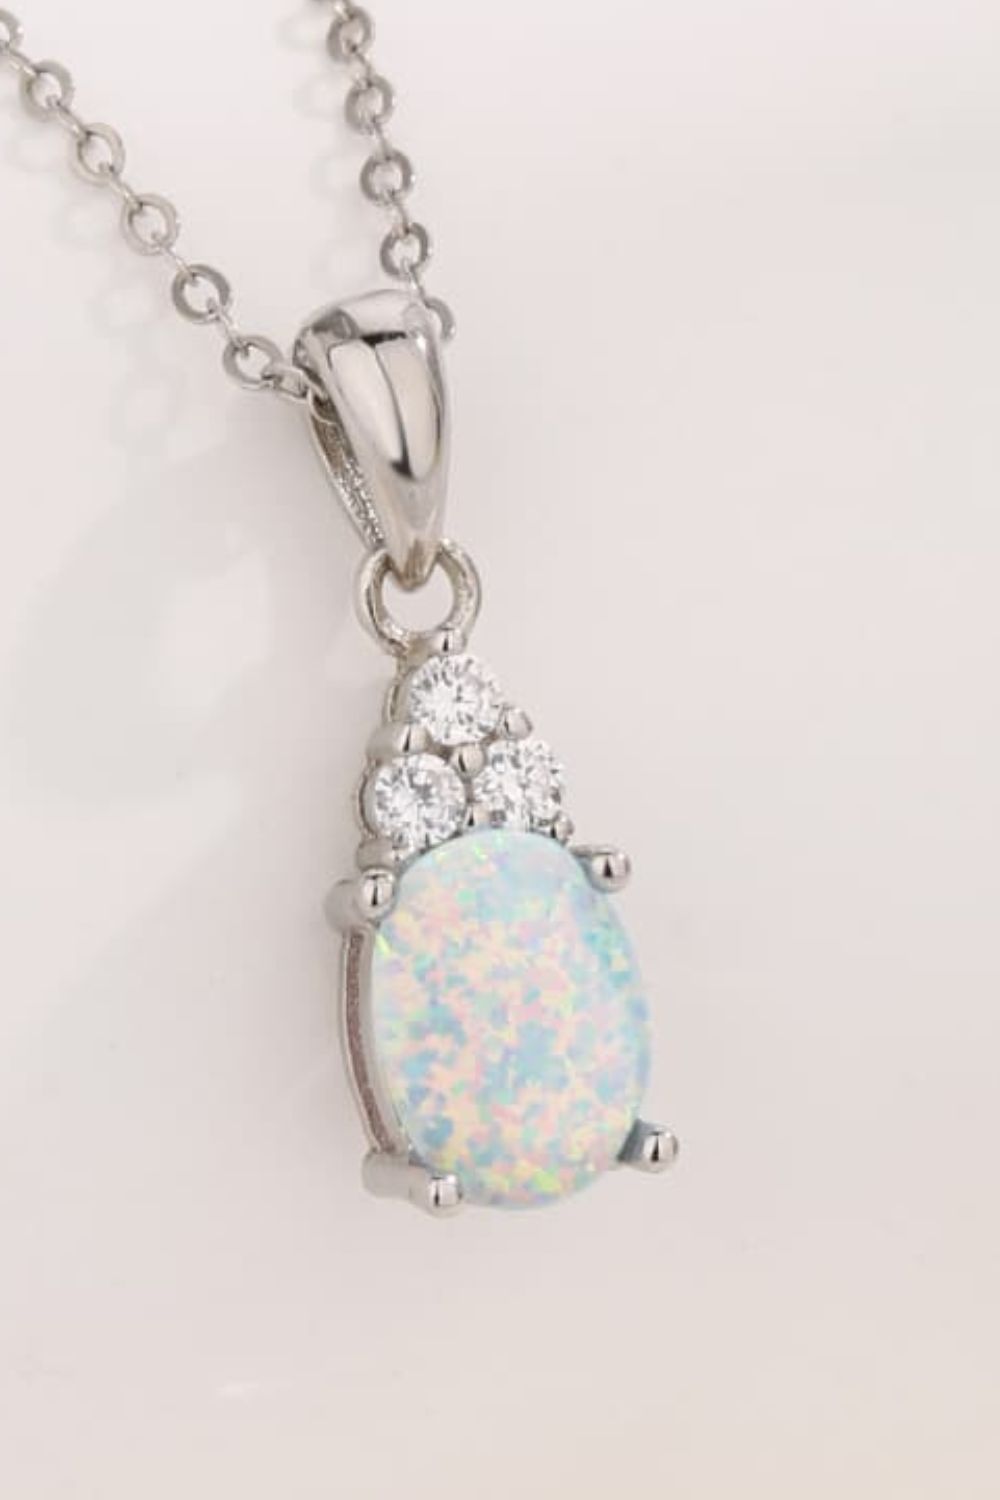 Find Your Center Opal Pendant Necklace - Tangerine Goddess